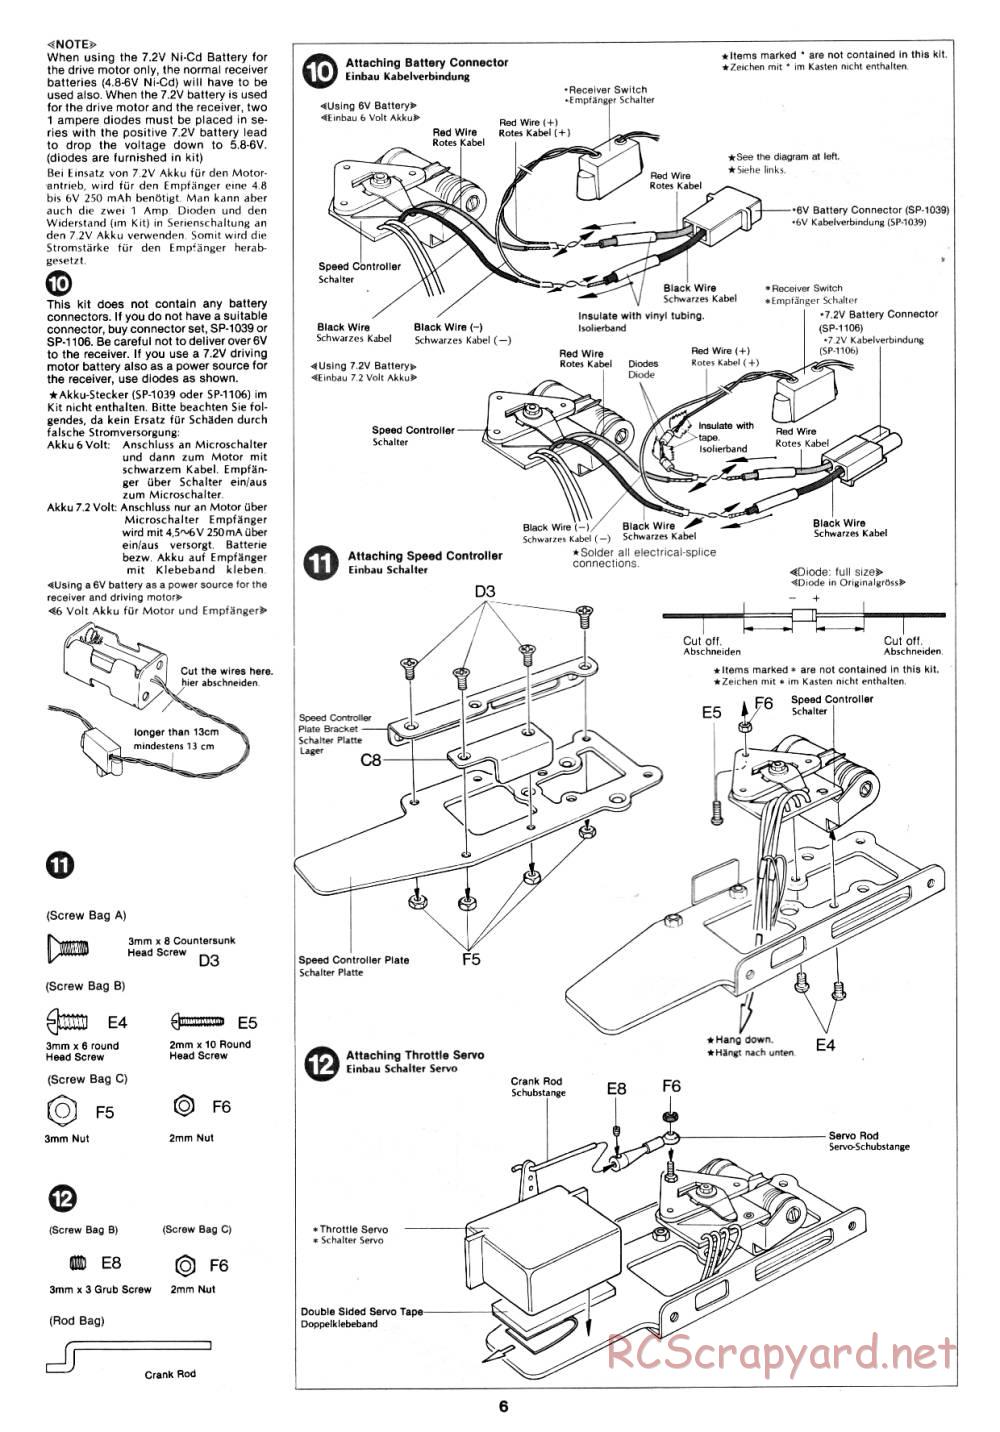 Tamiya - Datsun 280ZX - 58022 - Manual - Page 6